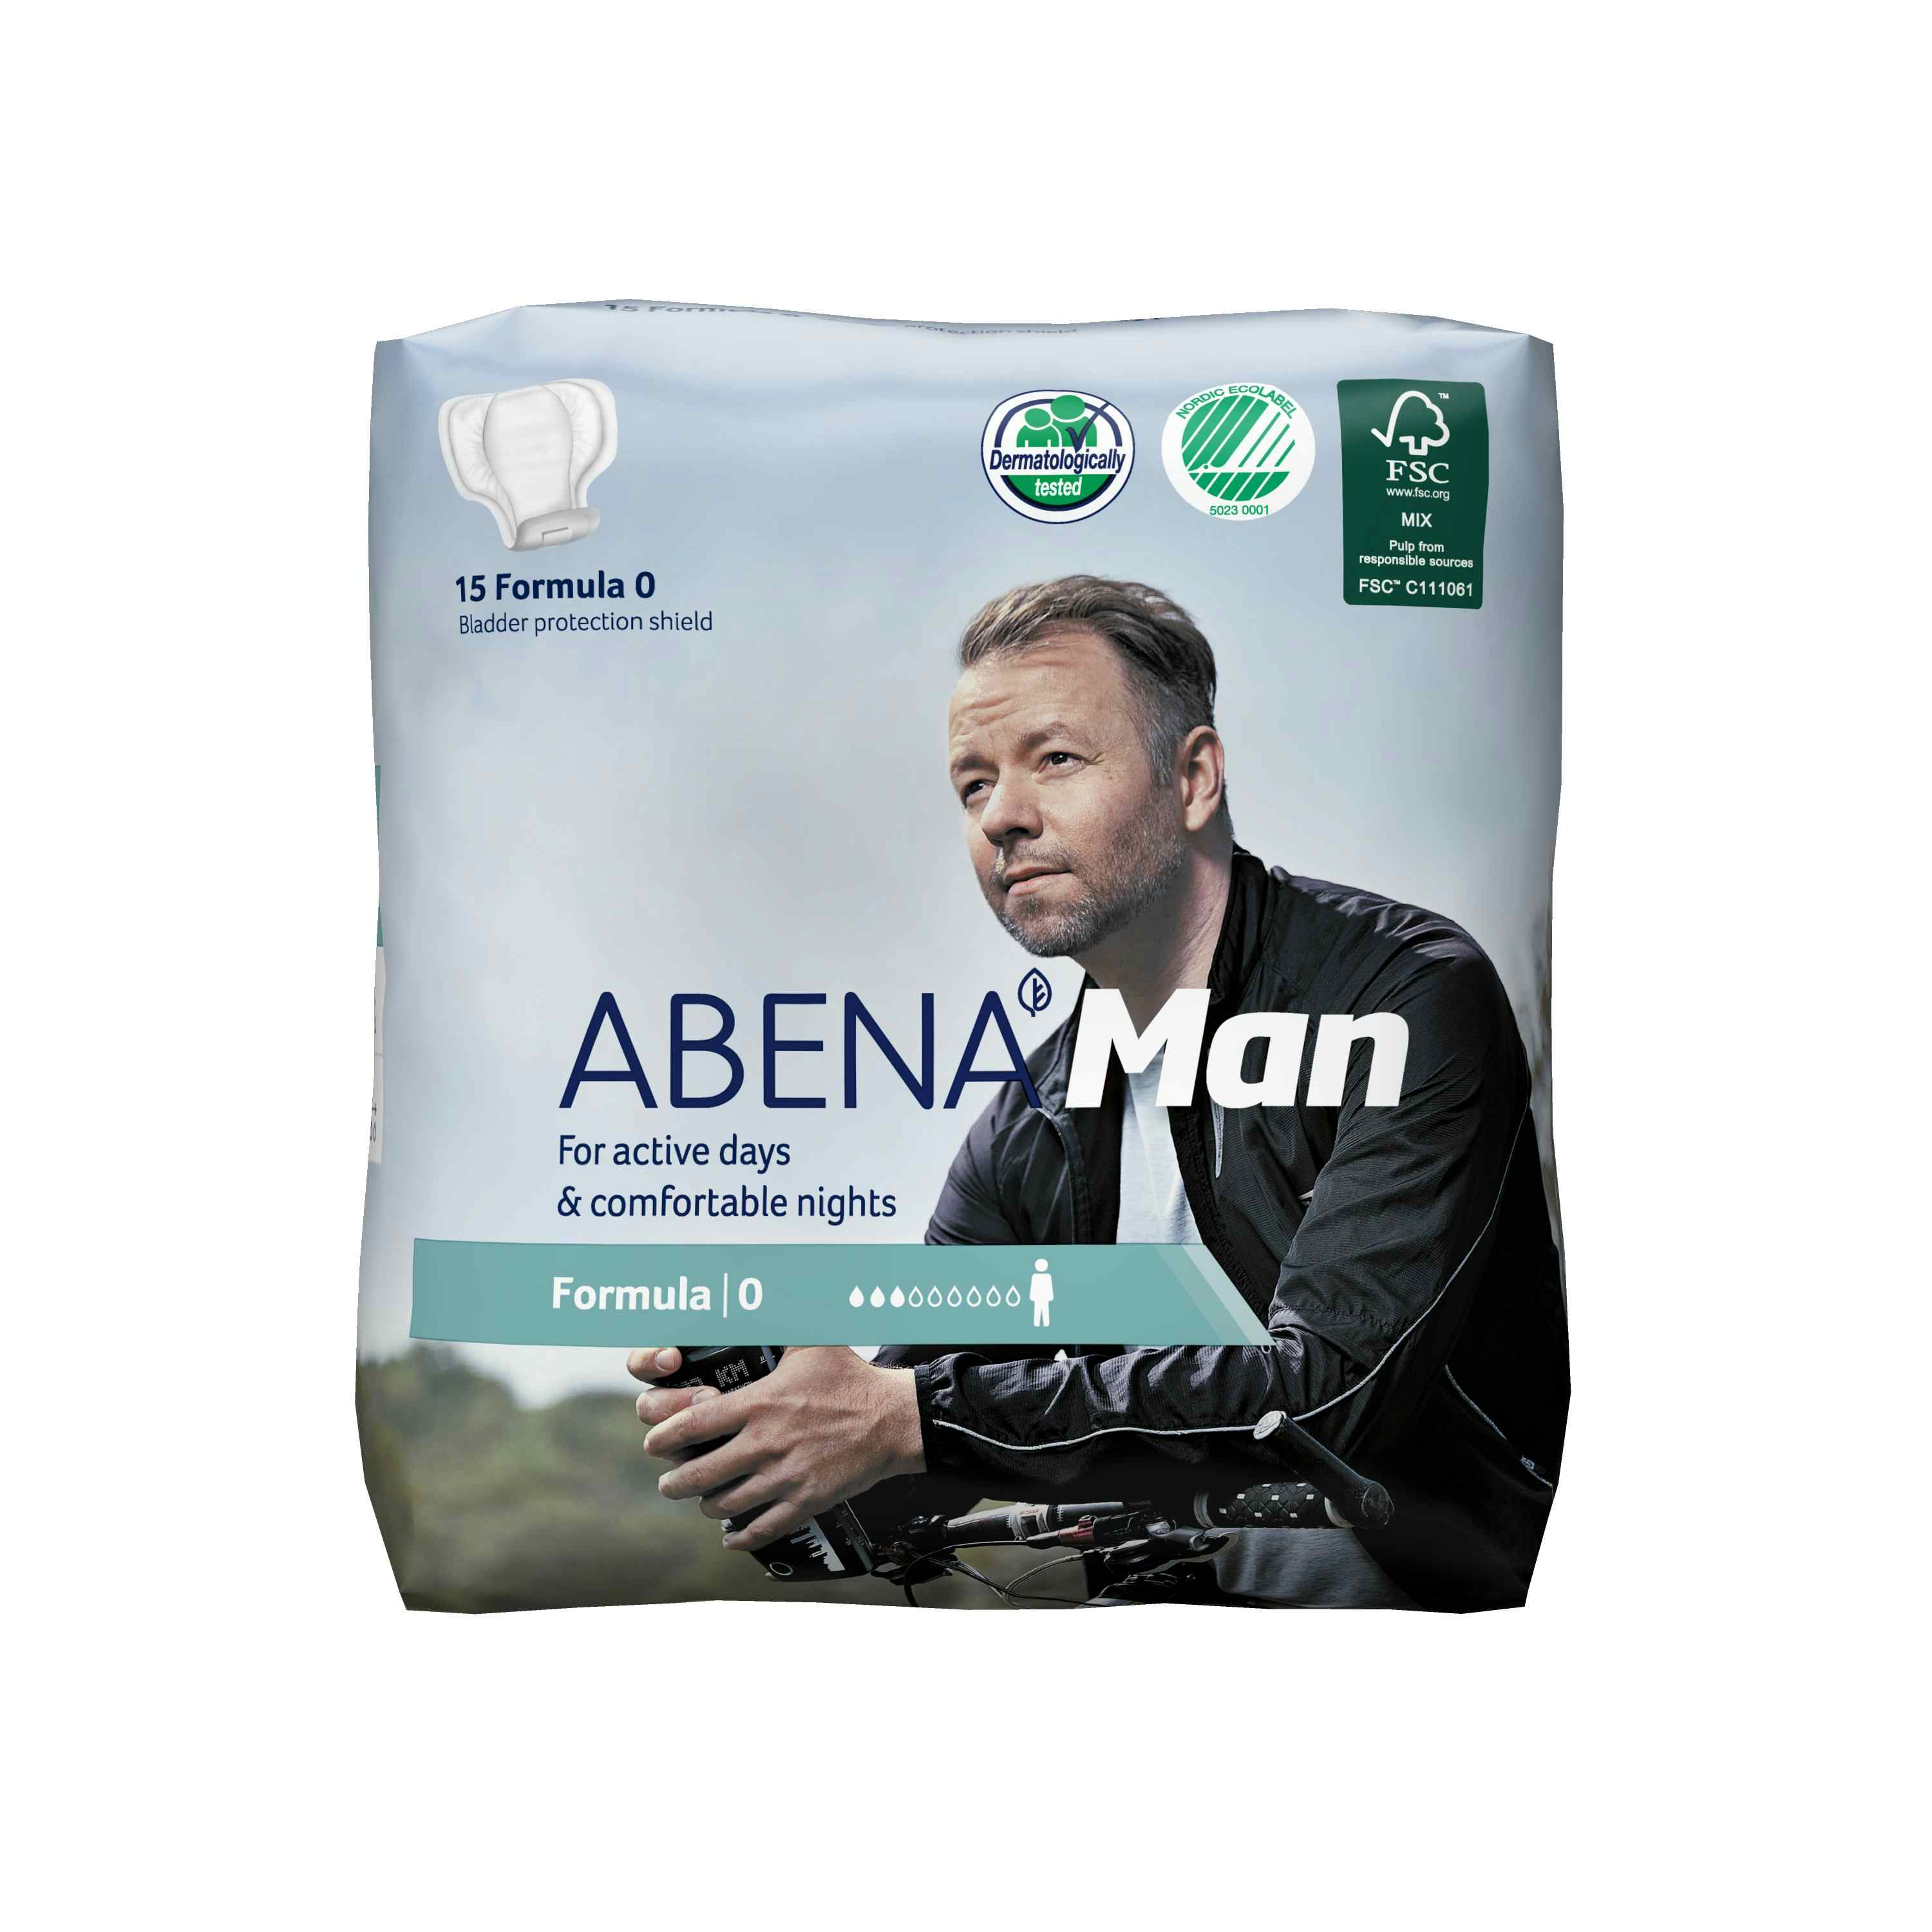  Abena-Man Adult Male Disposable Bladder Control Pad, Light Absorbency, 1000017161, Formula 0 (9") - Bag of 15